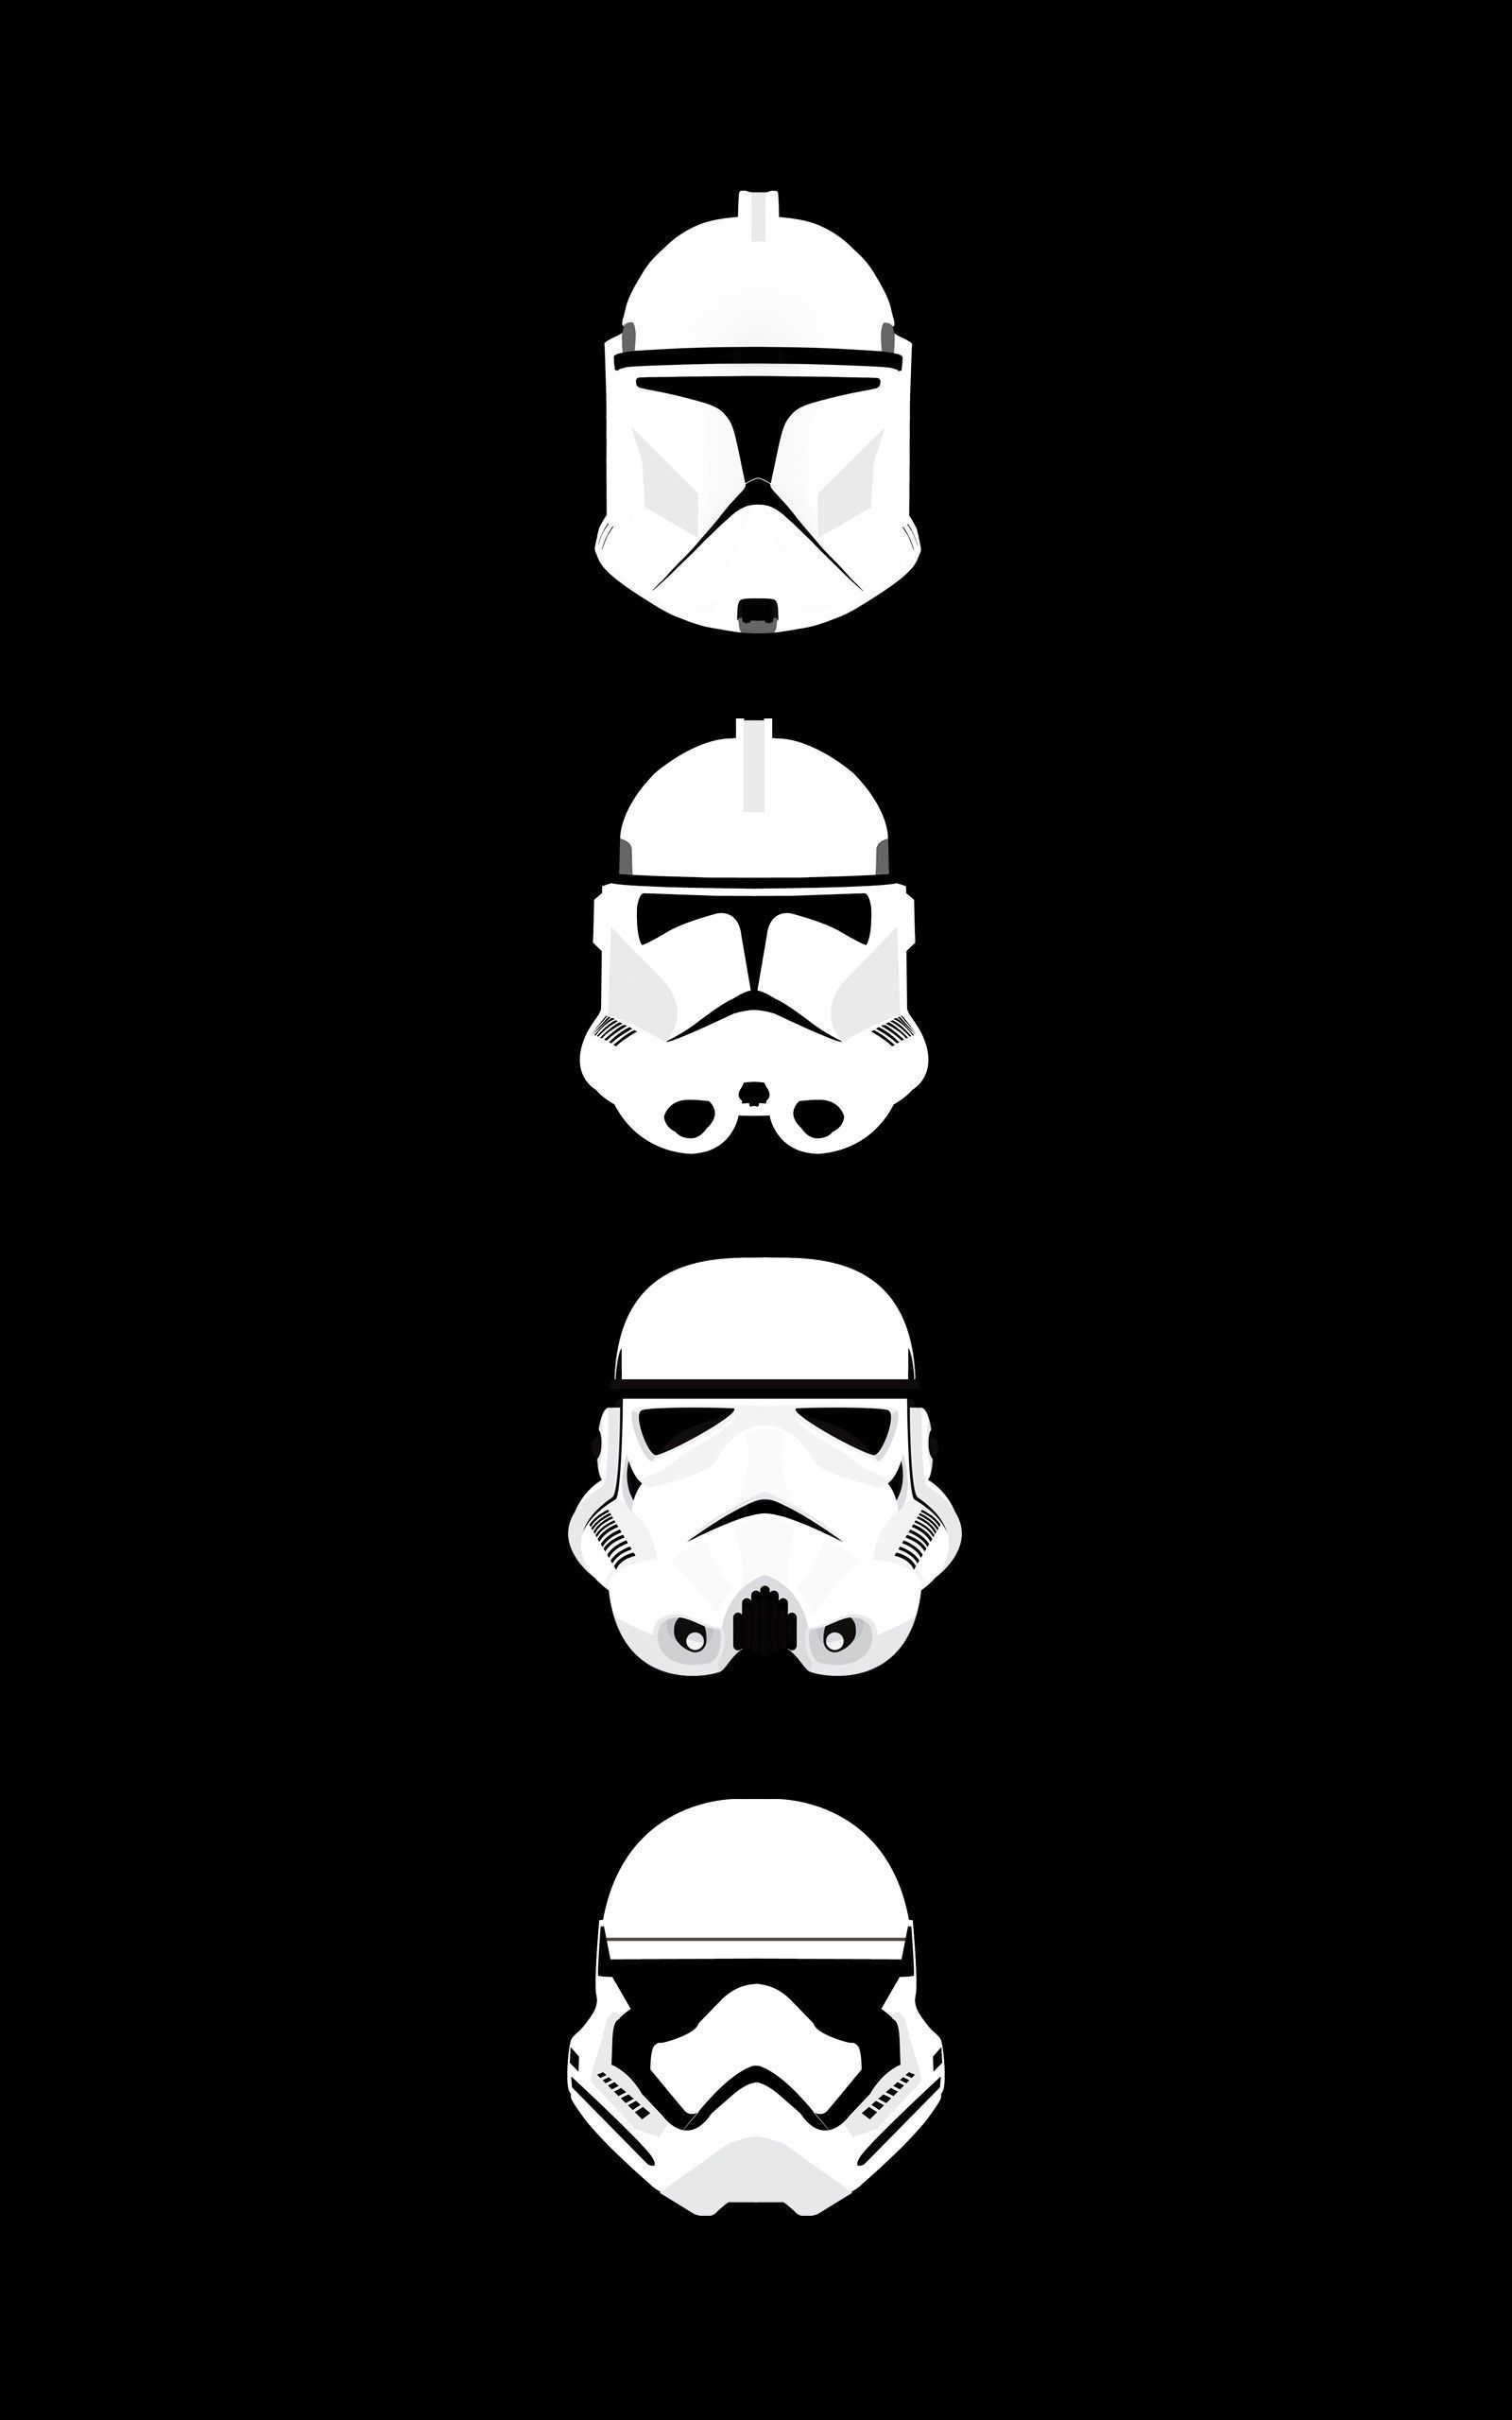 Star Wars iPhone Icon Wallpaper